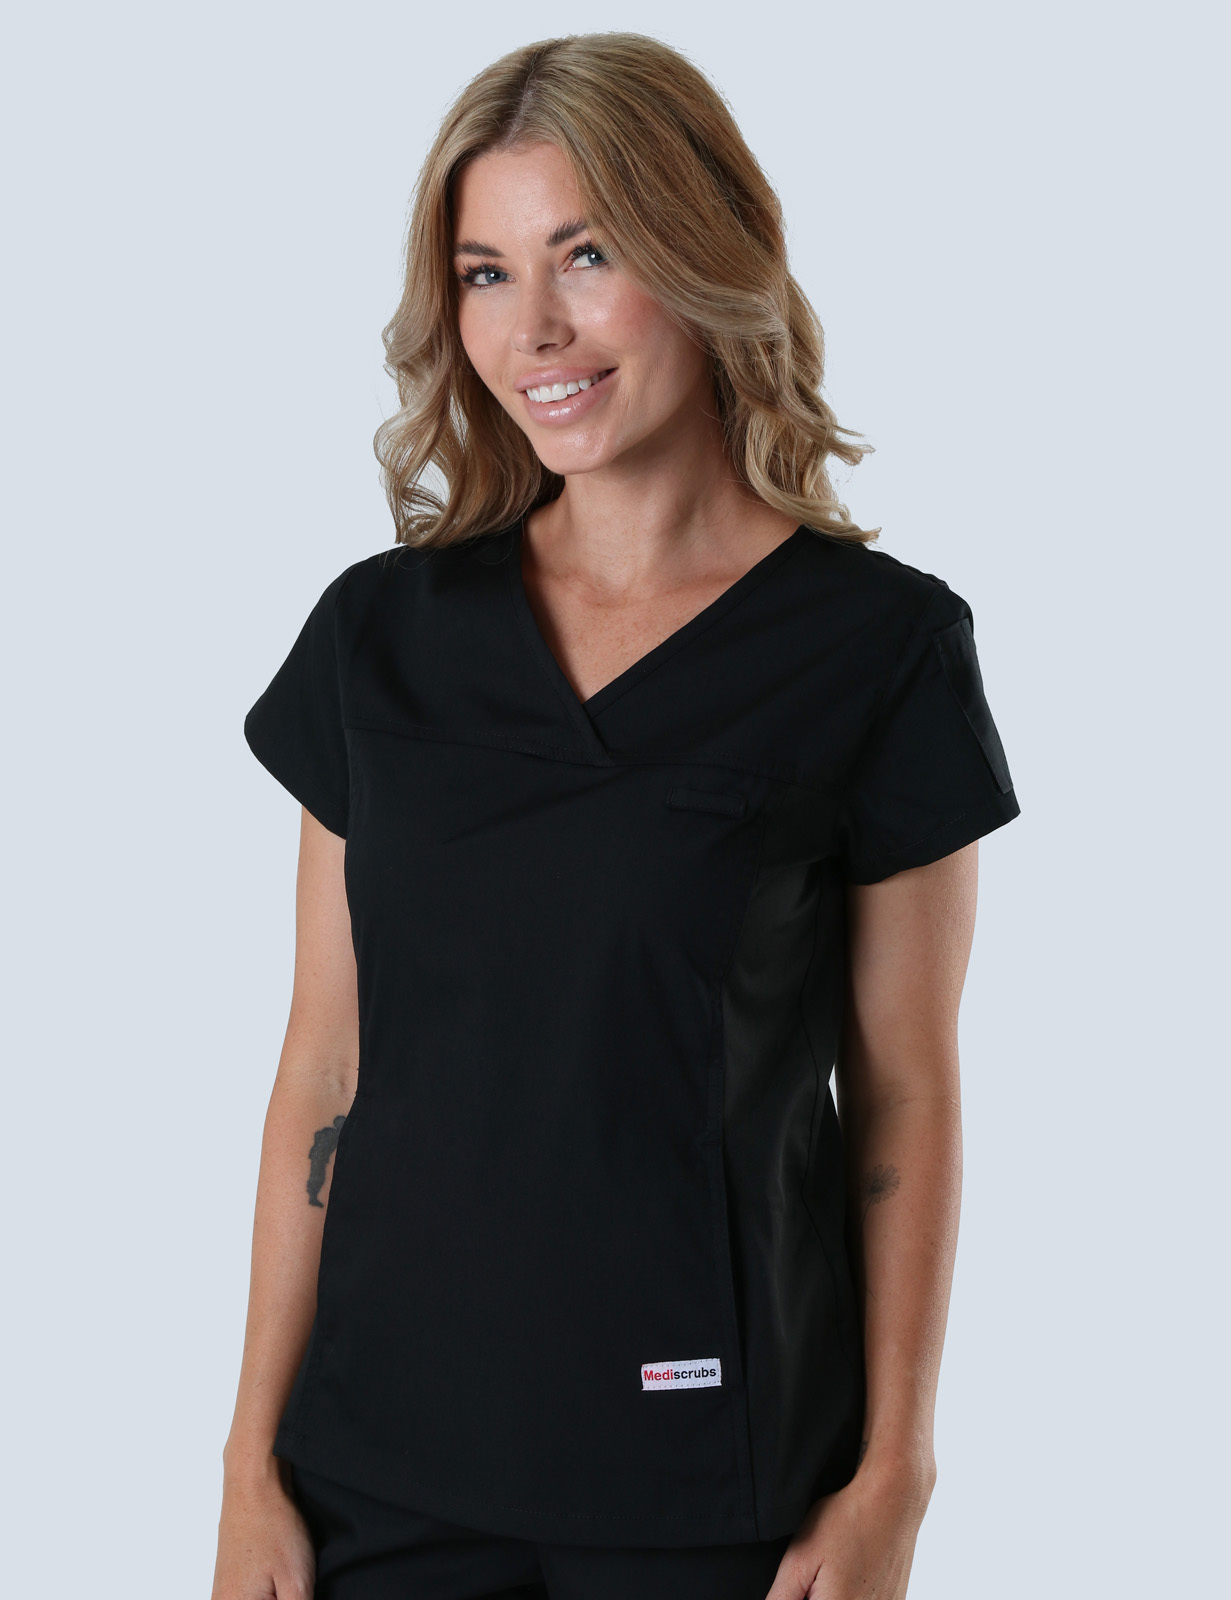 Canberra Hospital Medical Imaging Radiographer Uniform Top Only Bundle (Women's Fit Spandex Top in Black + Logos)